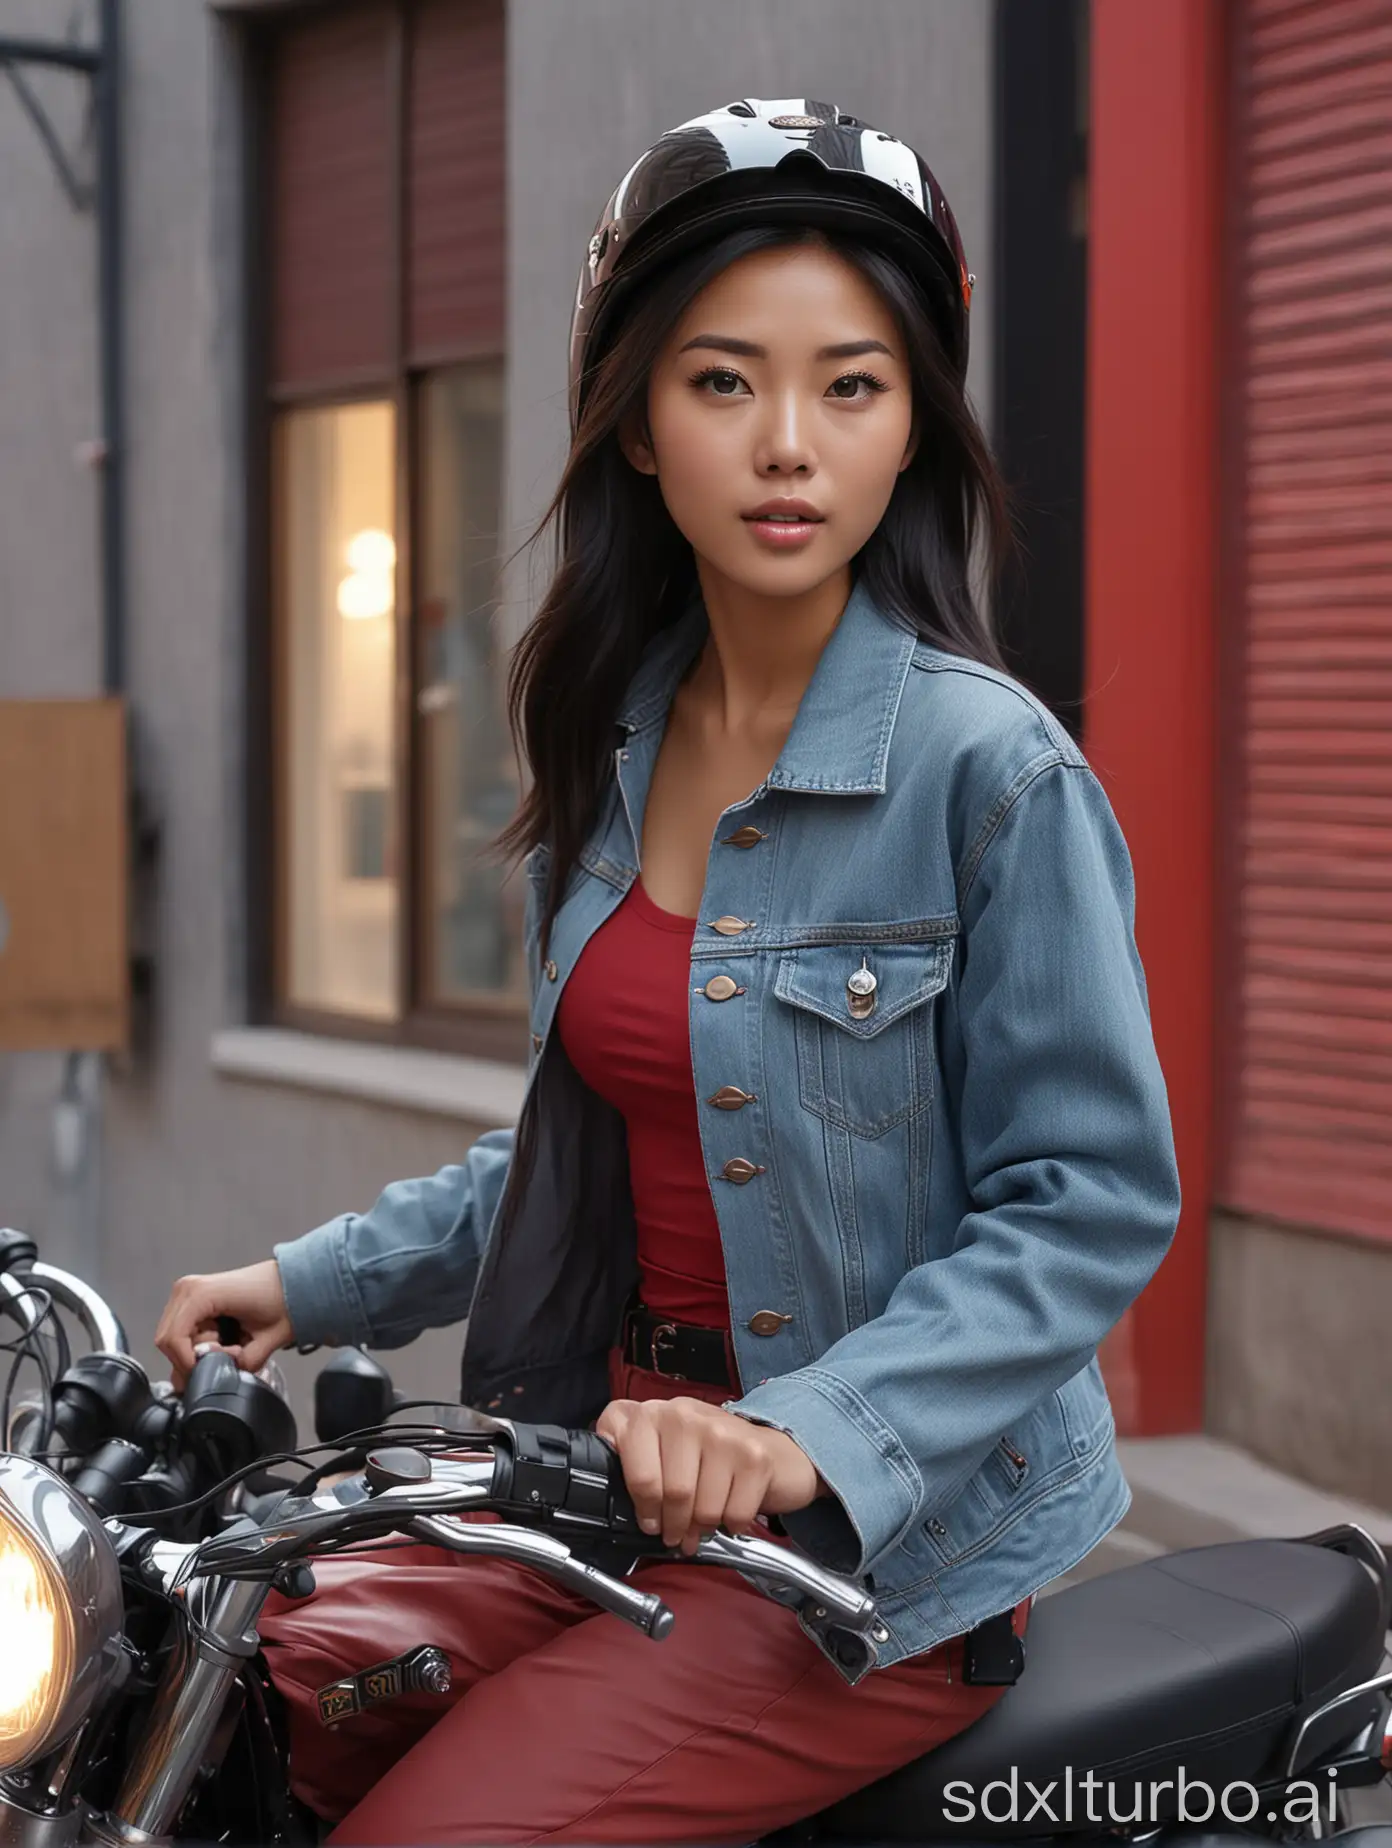 Stylish-Asian-Woman-Riding-Motorcycle-in-Urban-Setting